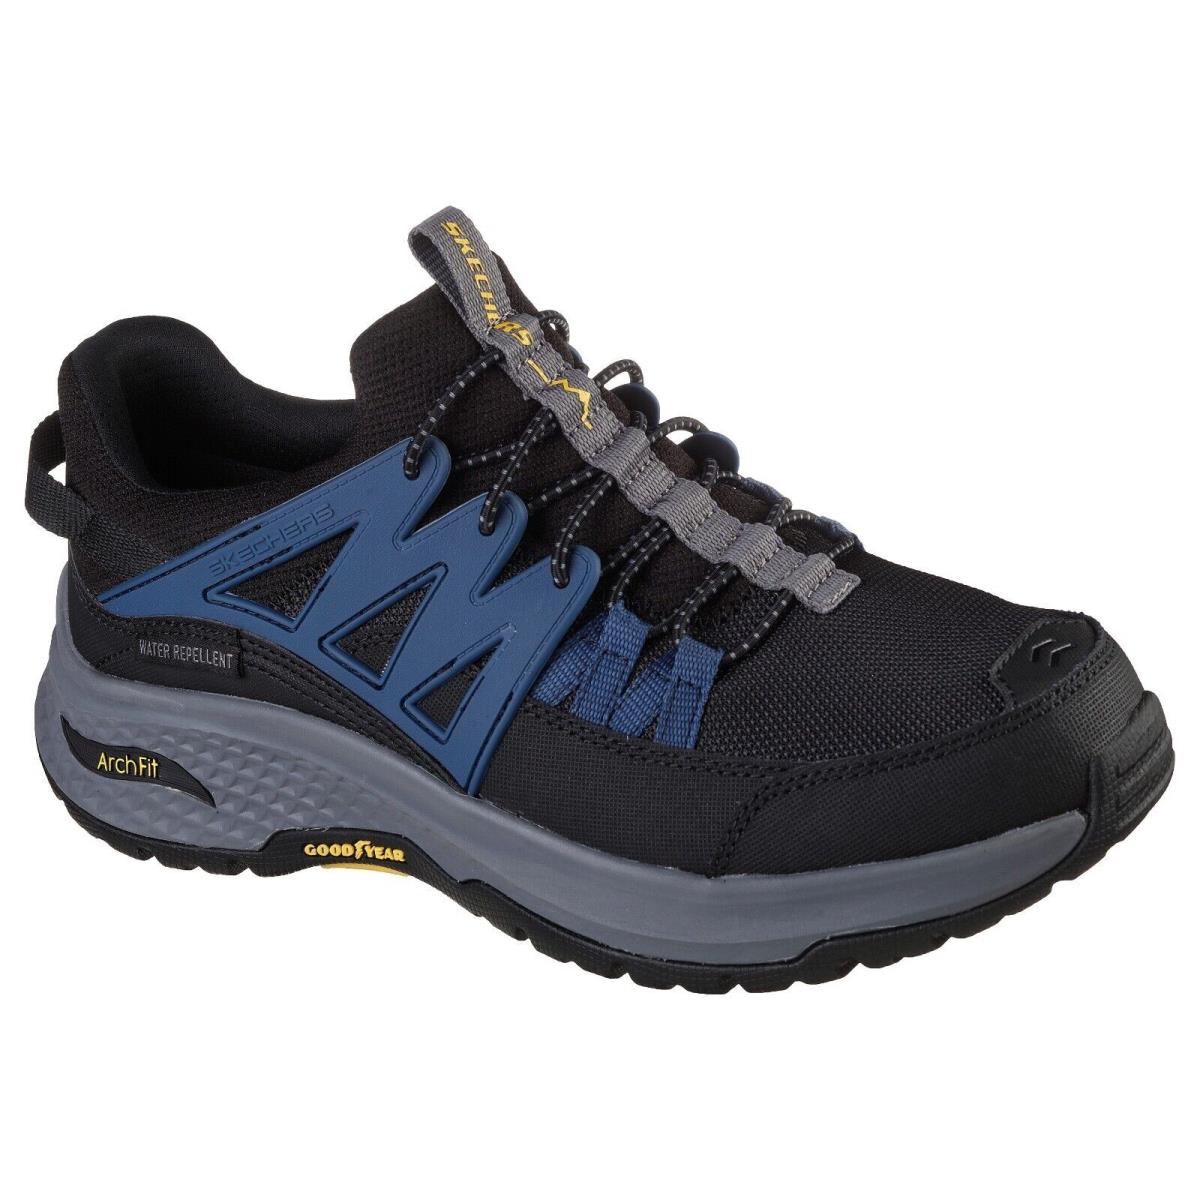 Men Skechers Rlft Ripple Gilden Trail Shoes 204583 /bkbl Multi Sizes Black/blue - Black/Blue